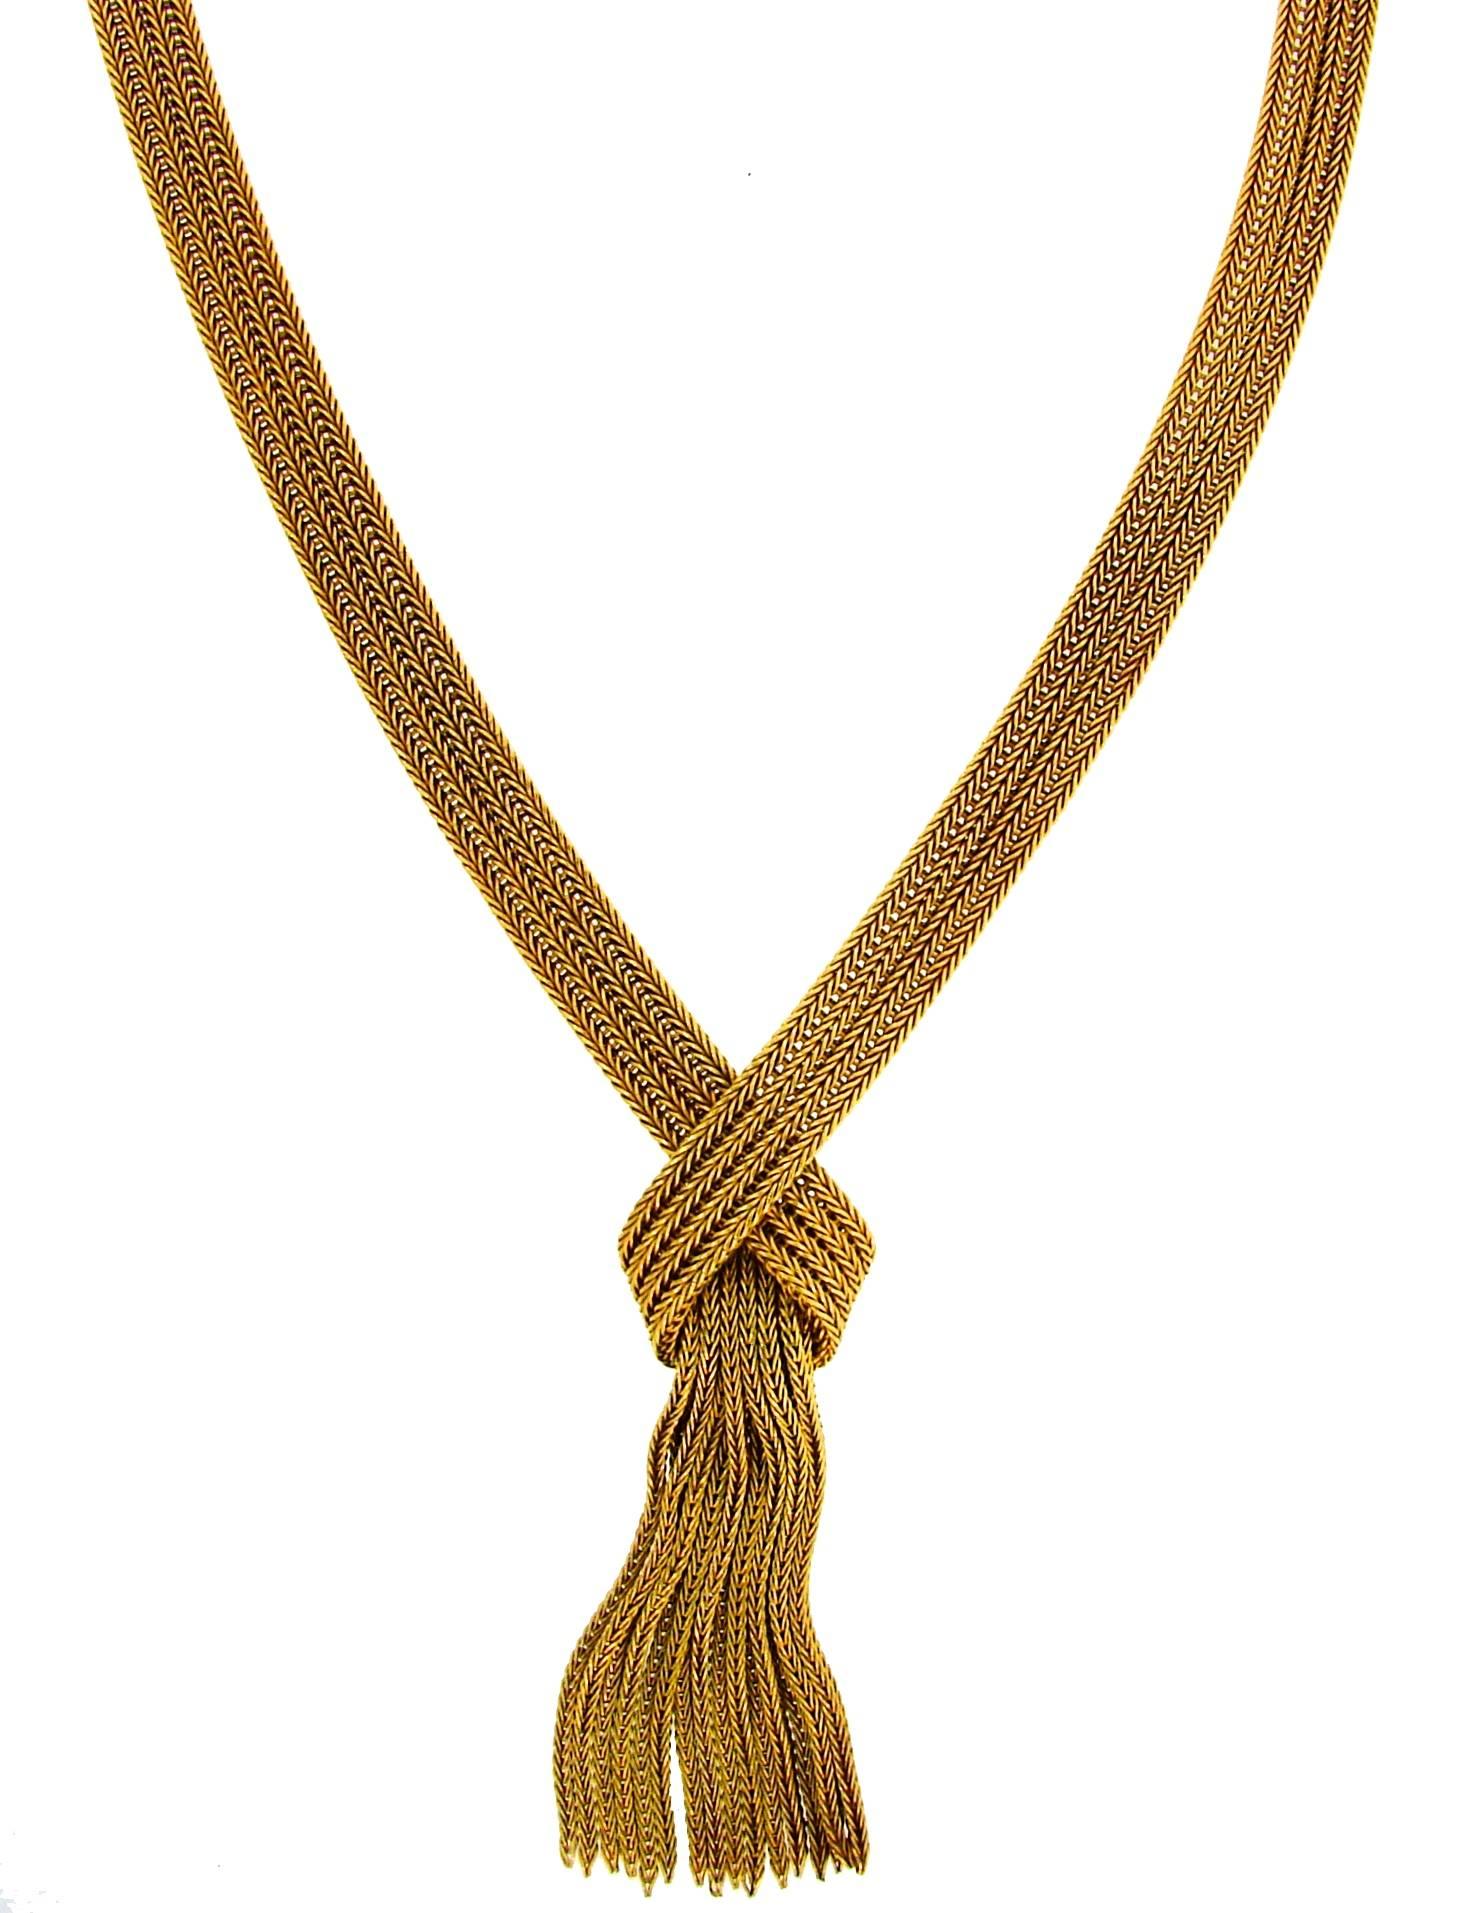 Grosse Yellow Gold Retro Tassel Necklace, 1960s 1